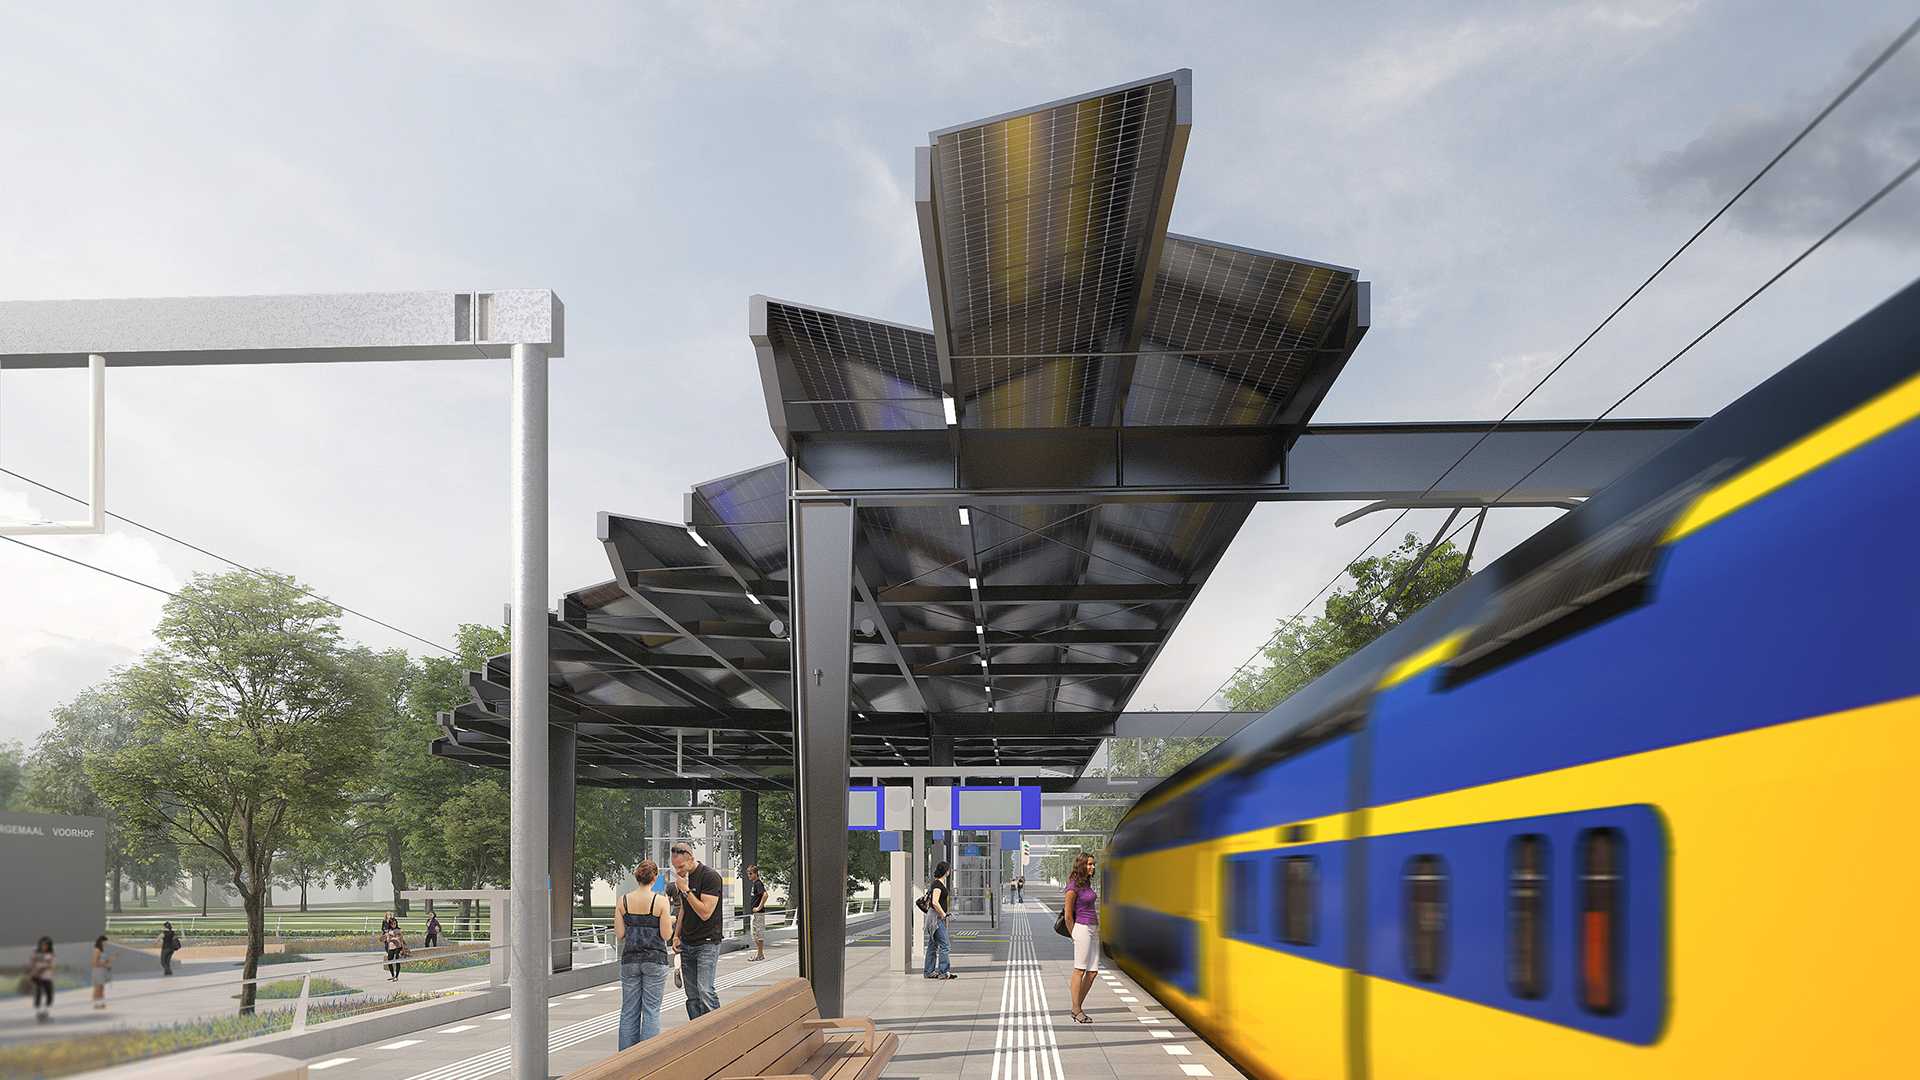 hoe-ontwerp-je-het-eerste-energieneutrale-station-van-nederland